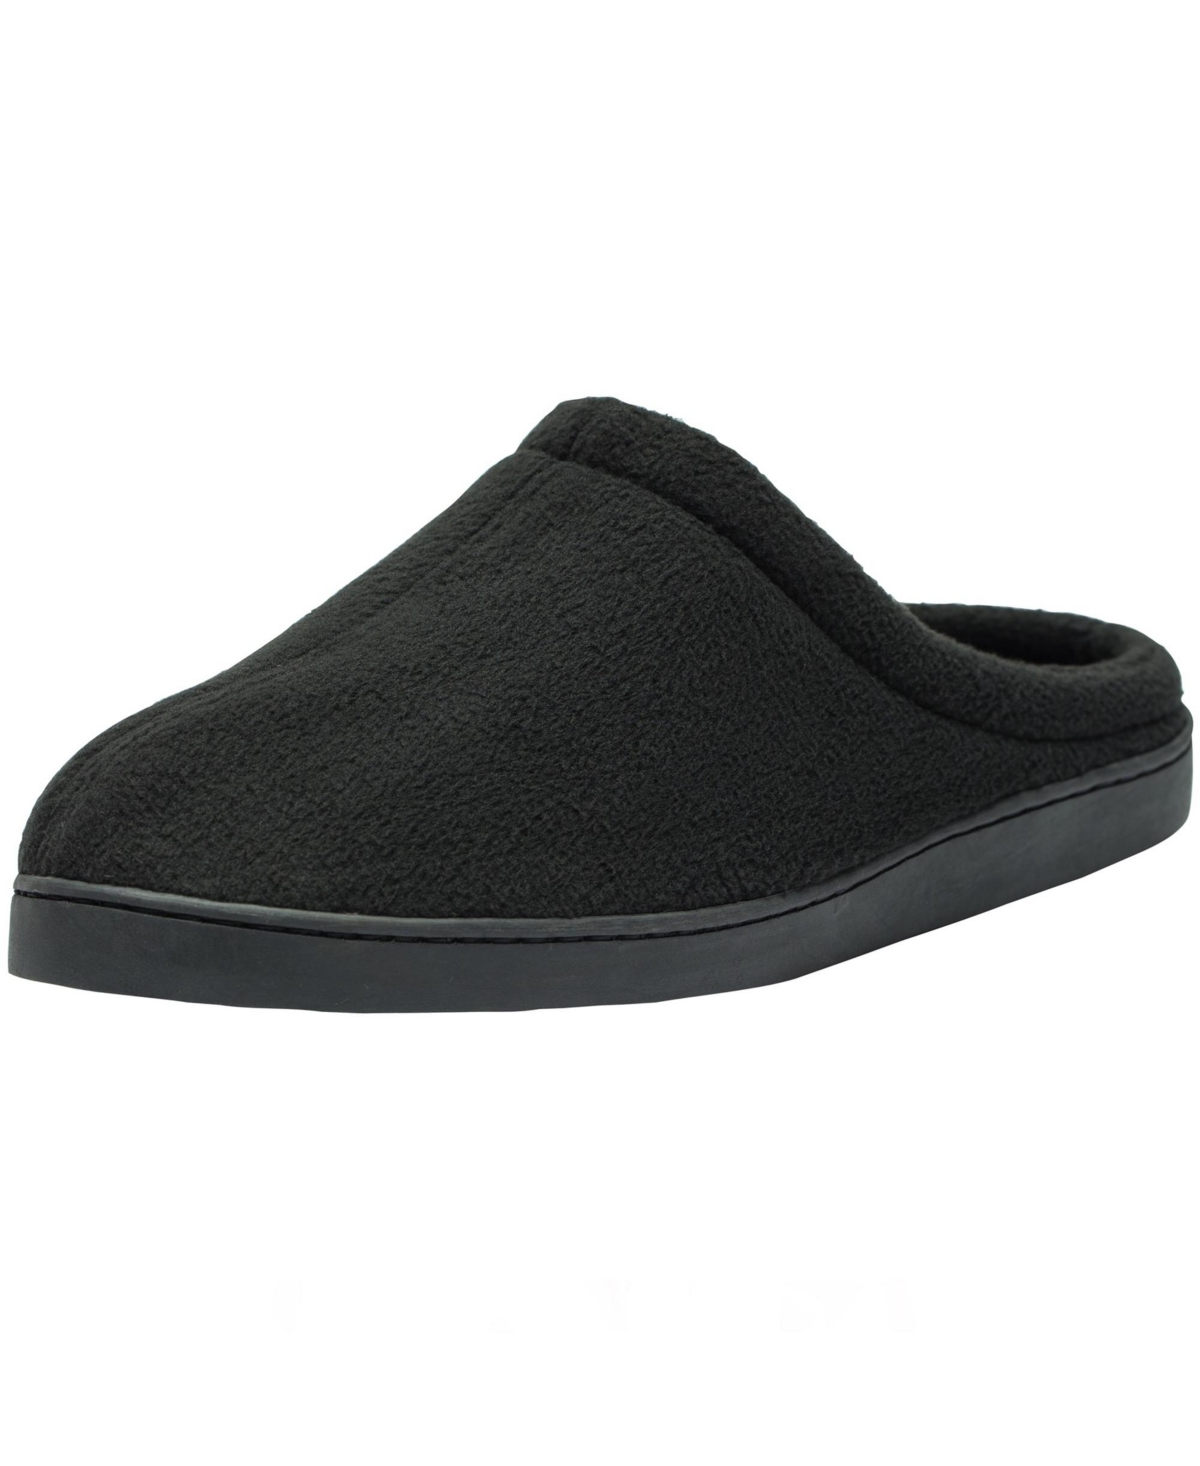 Mens Memory Foam Fleece Clog Slippers Wide Warm Slip On House Shoes - Black